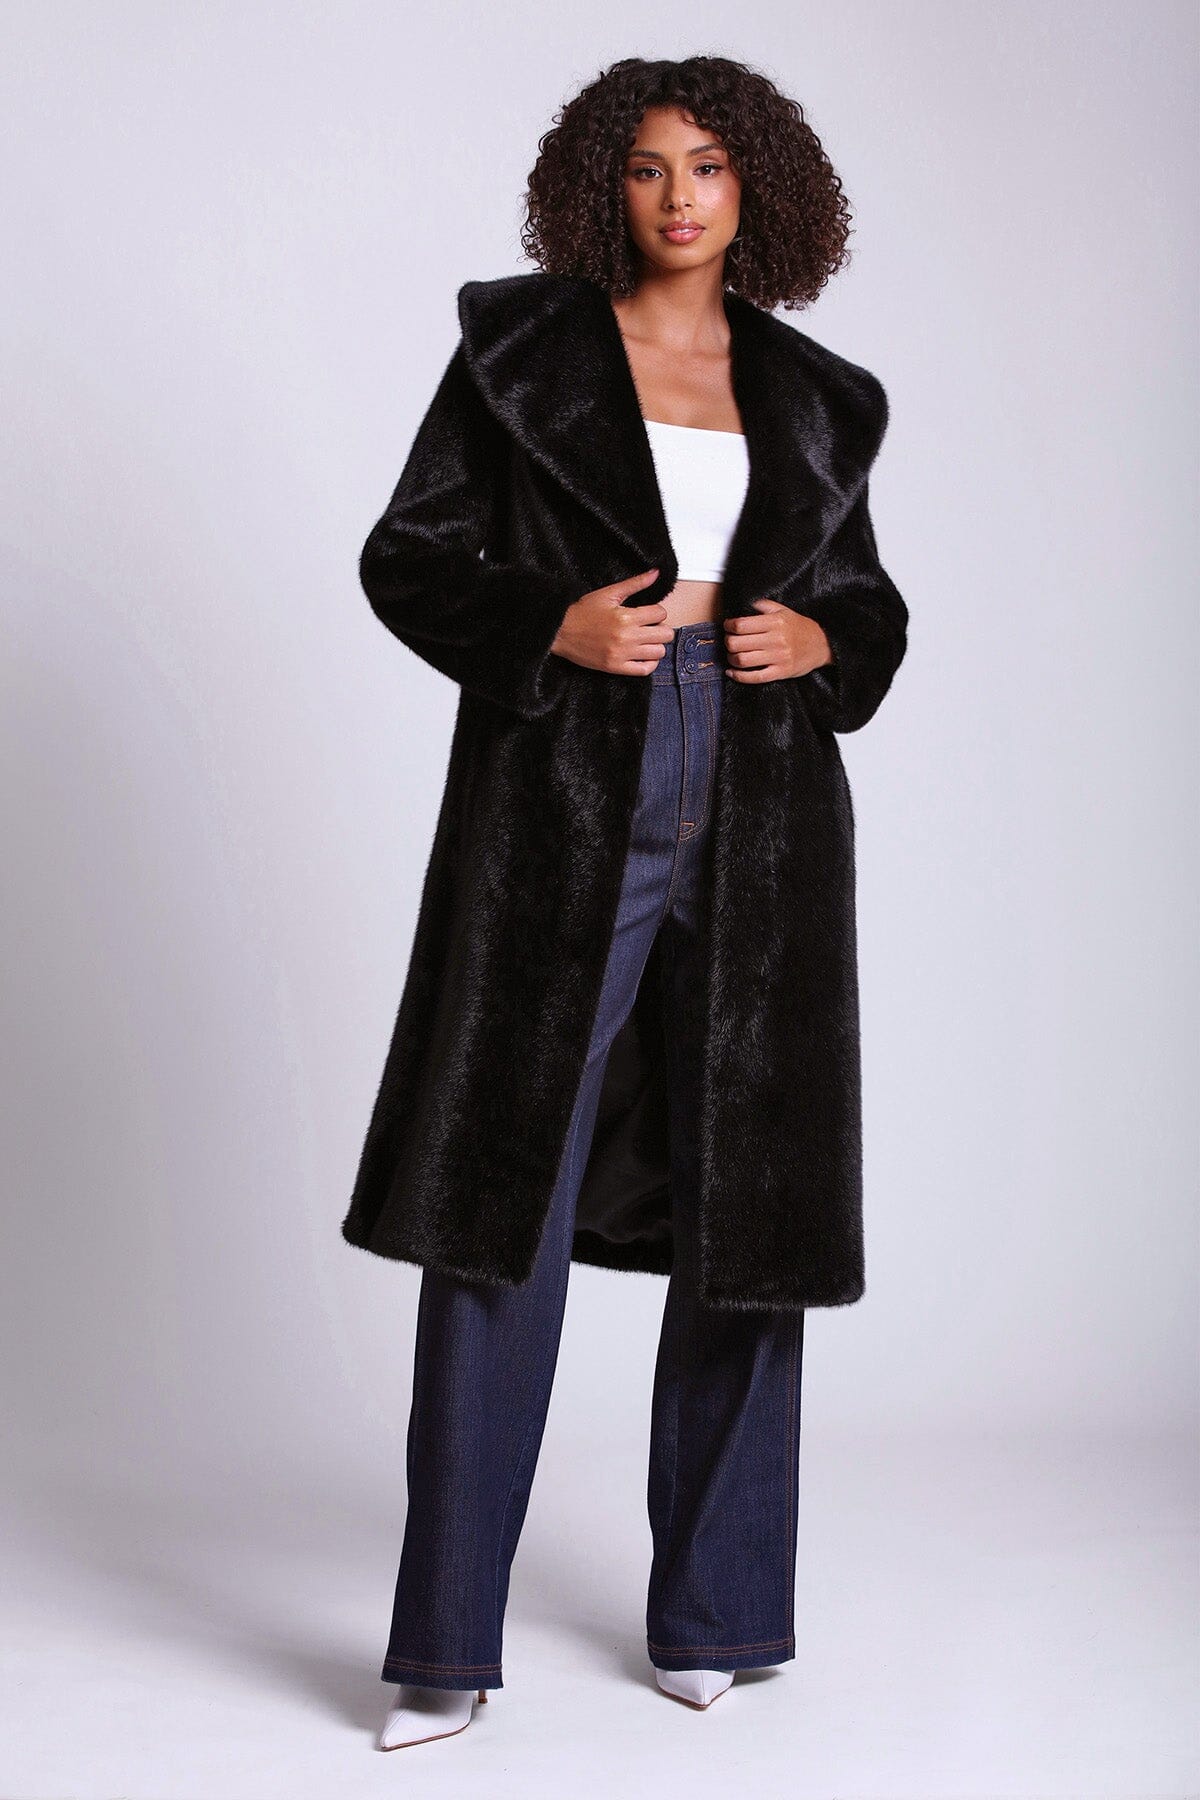 Black shawl collar faux fur long coat jacket - figure flattering date night coats outerwear for women